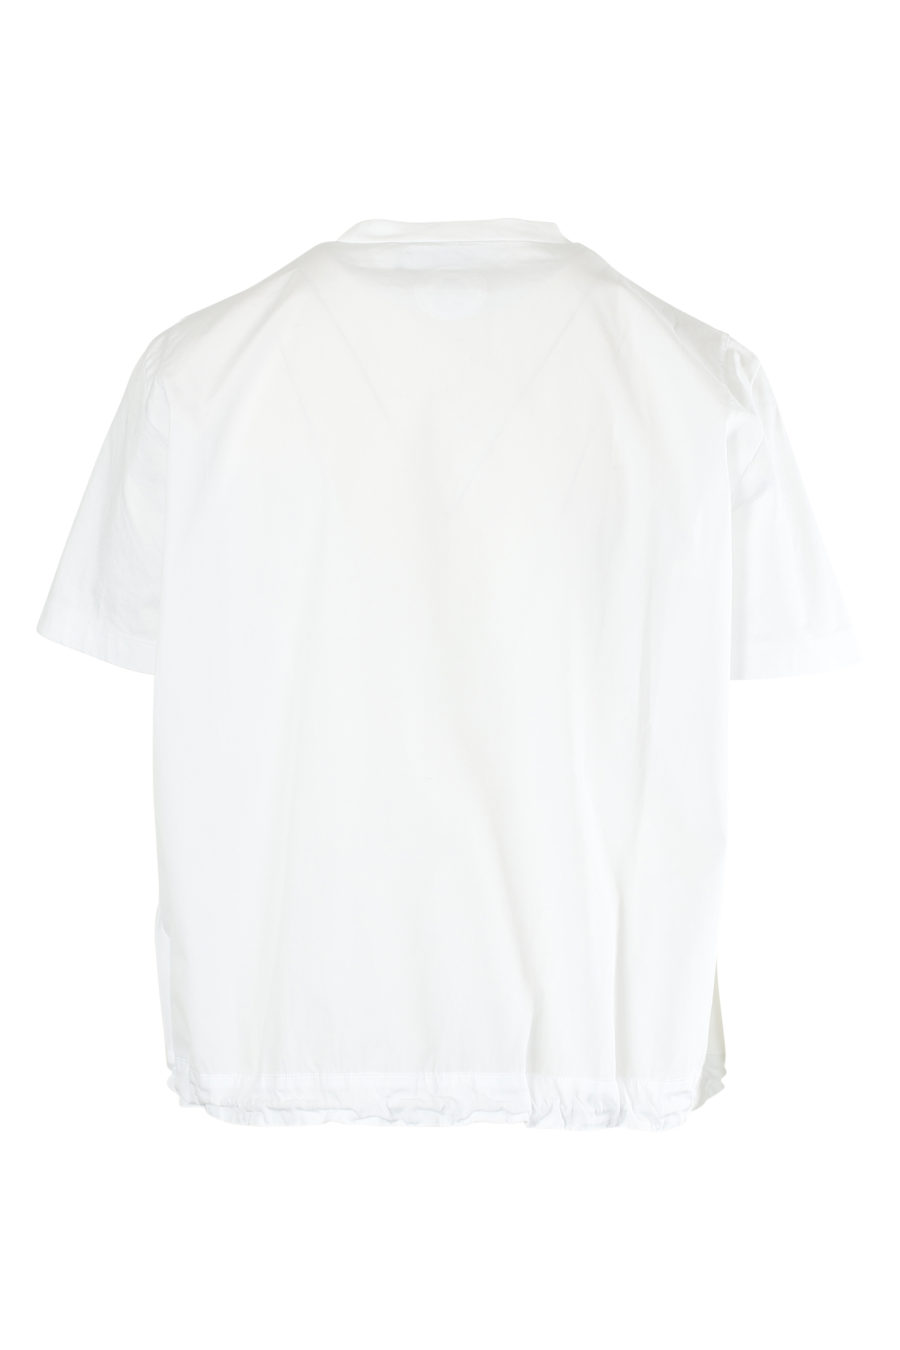 Camiseta blanca ajustable "Icon" graffiti - IMG 5464